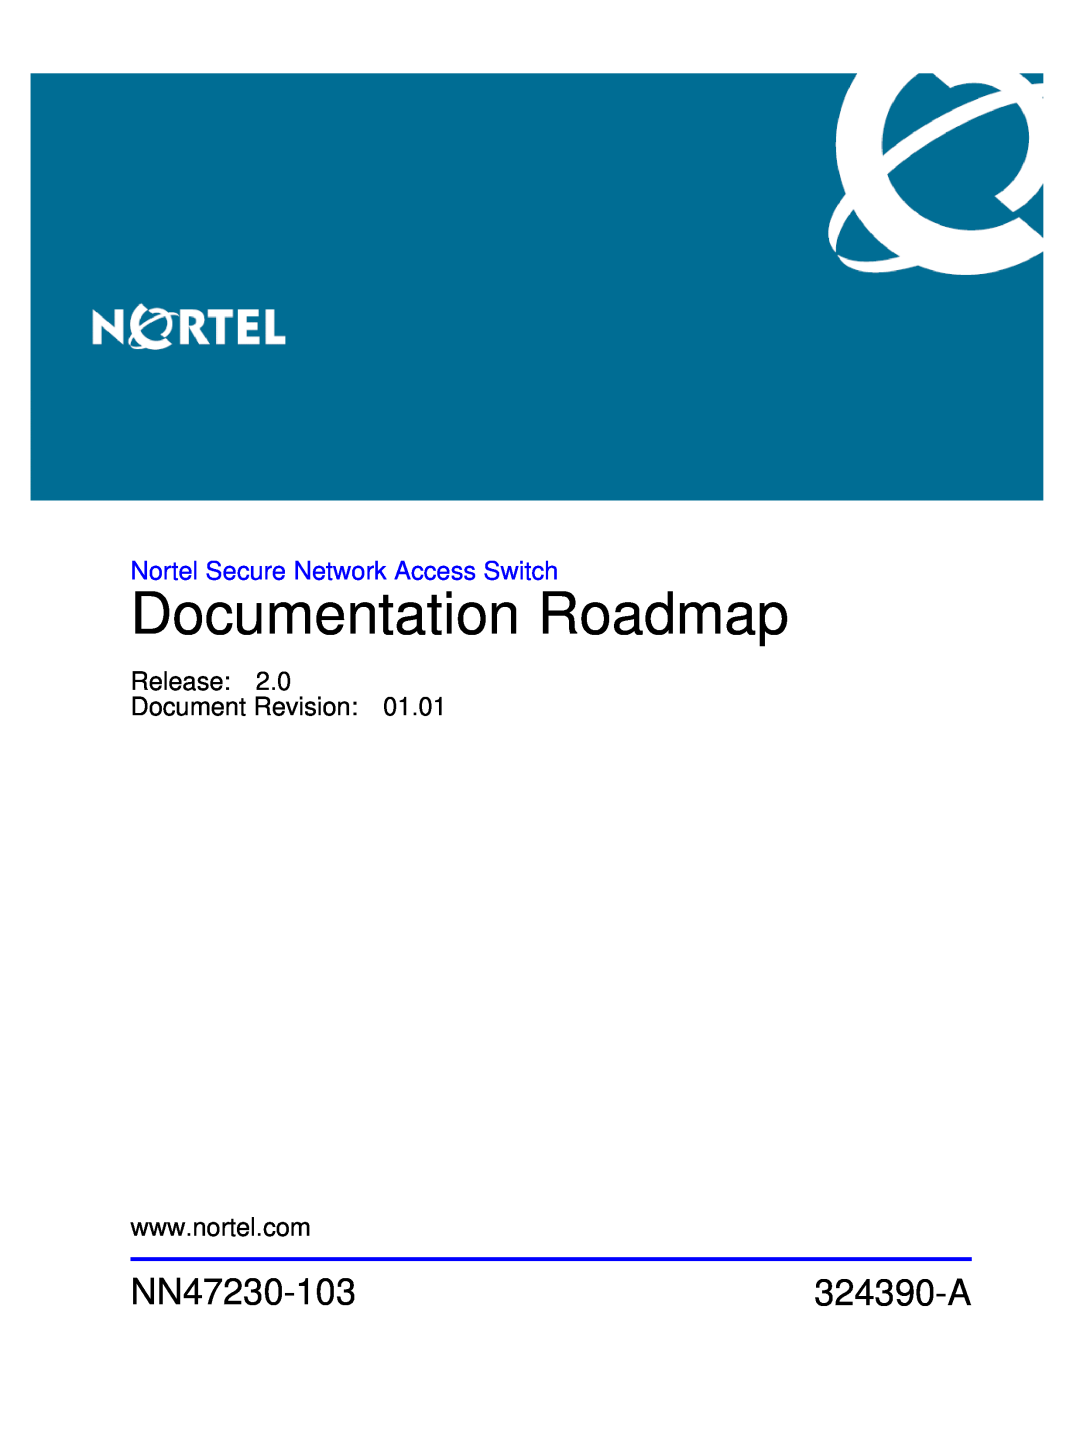 Nortel Networks NN47230-103 manual Documentation Roadmap, 324390-A, Nortel Secure Network Access Switch 